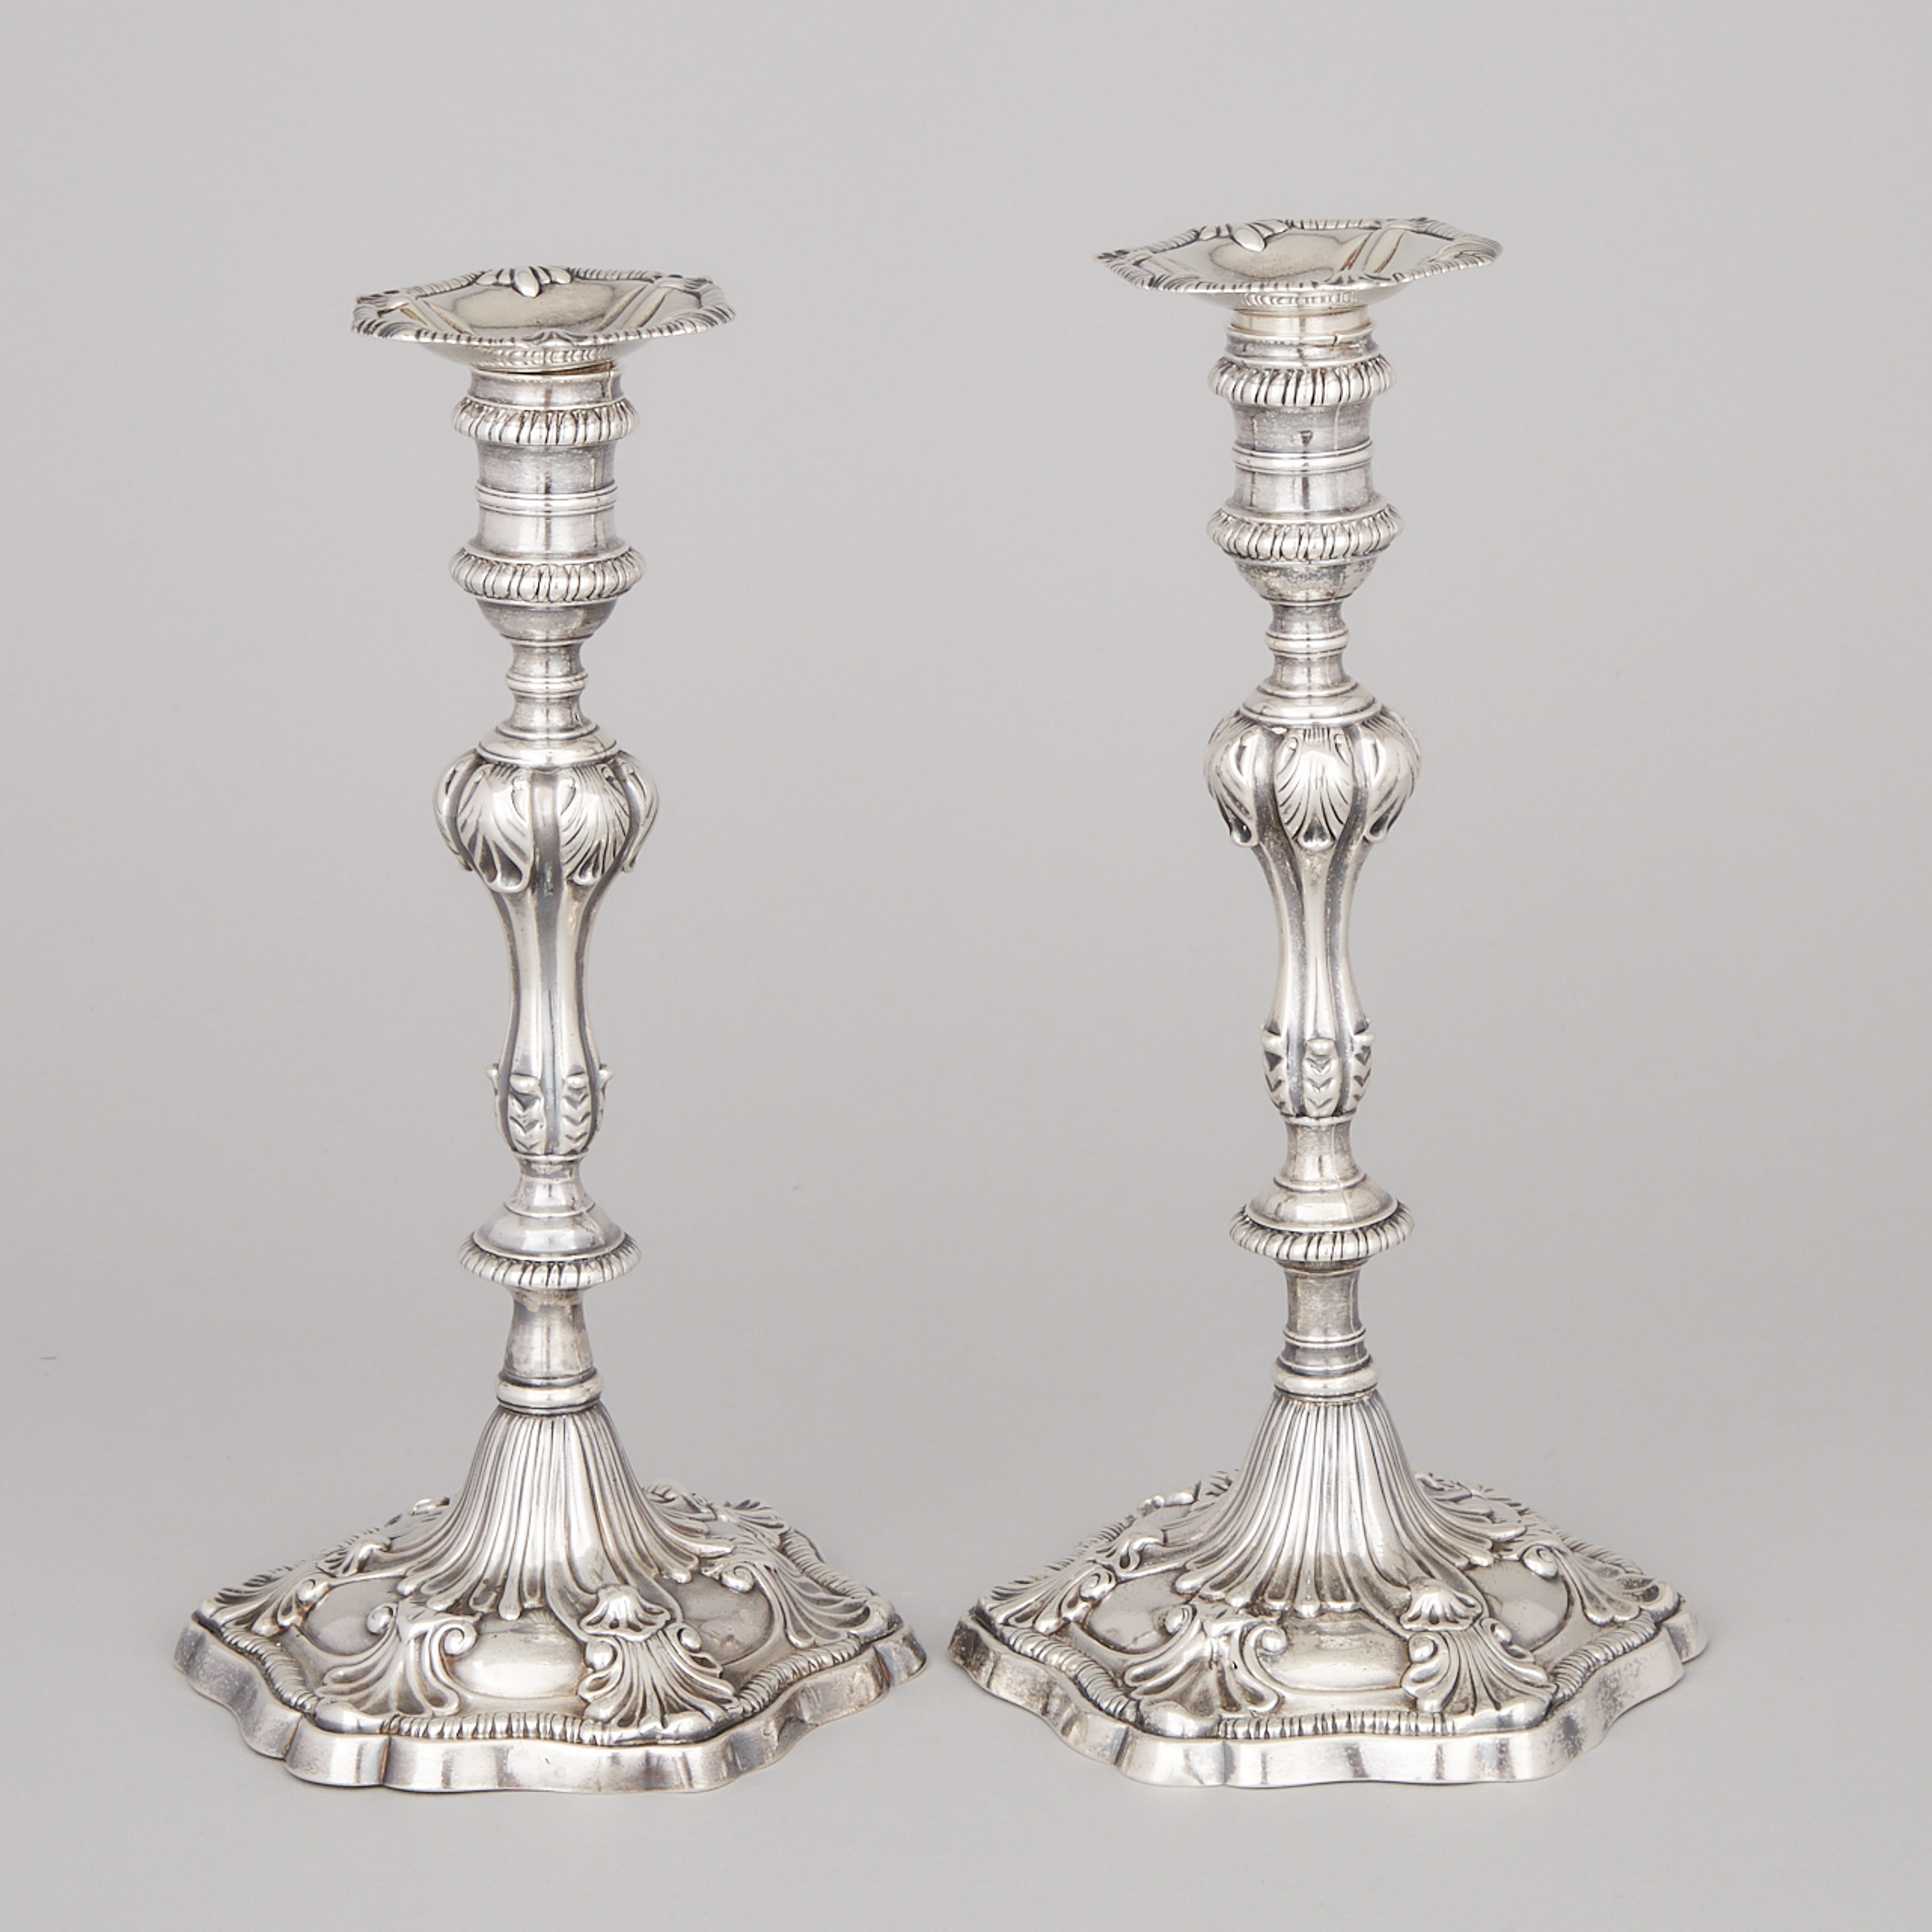 Pair of George III Silver Table Candlesticks, Ebenezer Coker, London, 1767